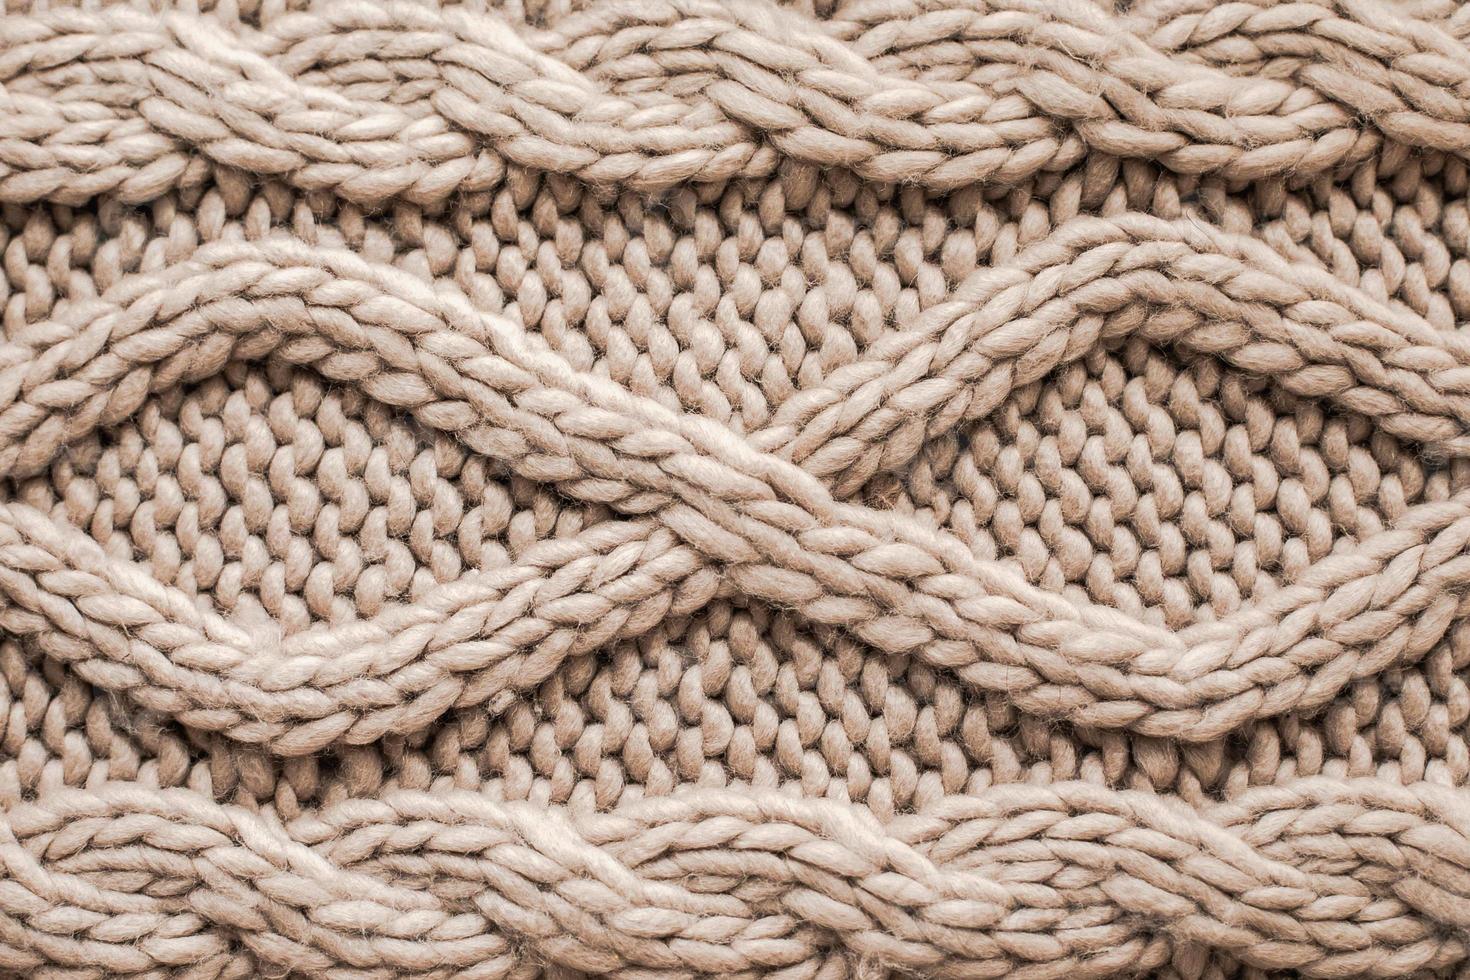 Beige knitting wool texture background. Woolen handmade knitted